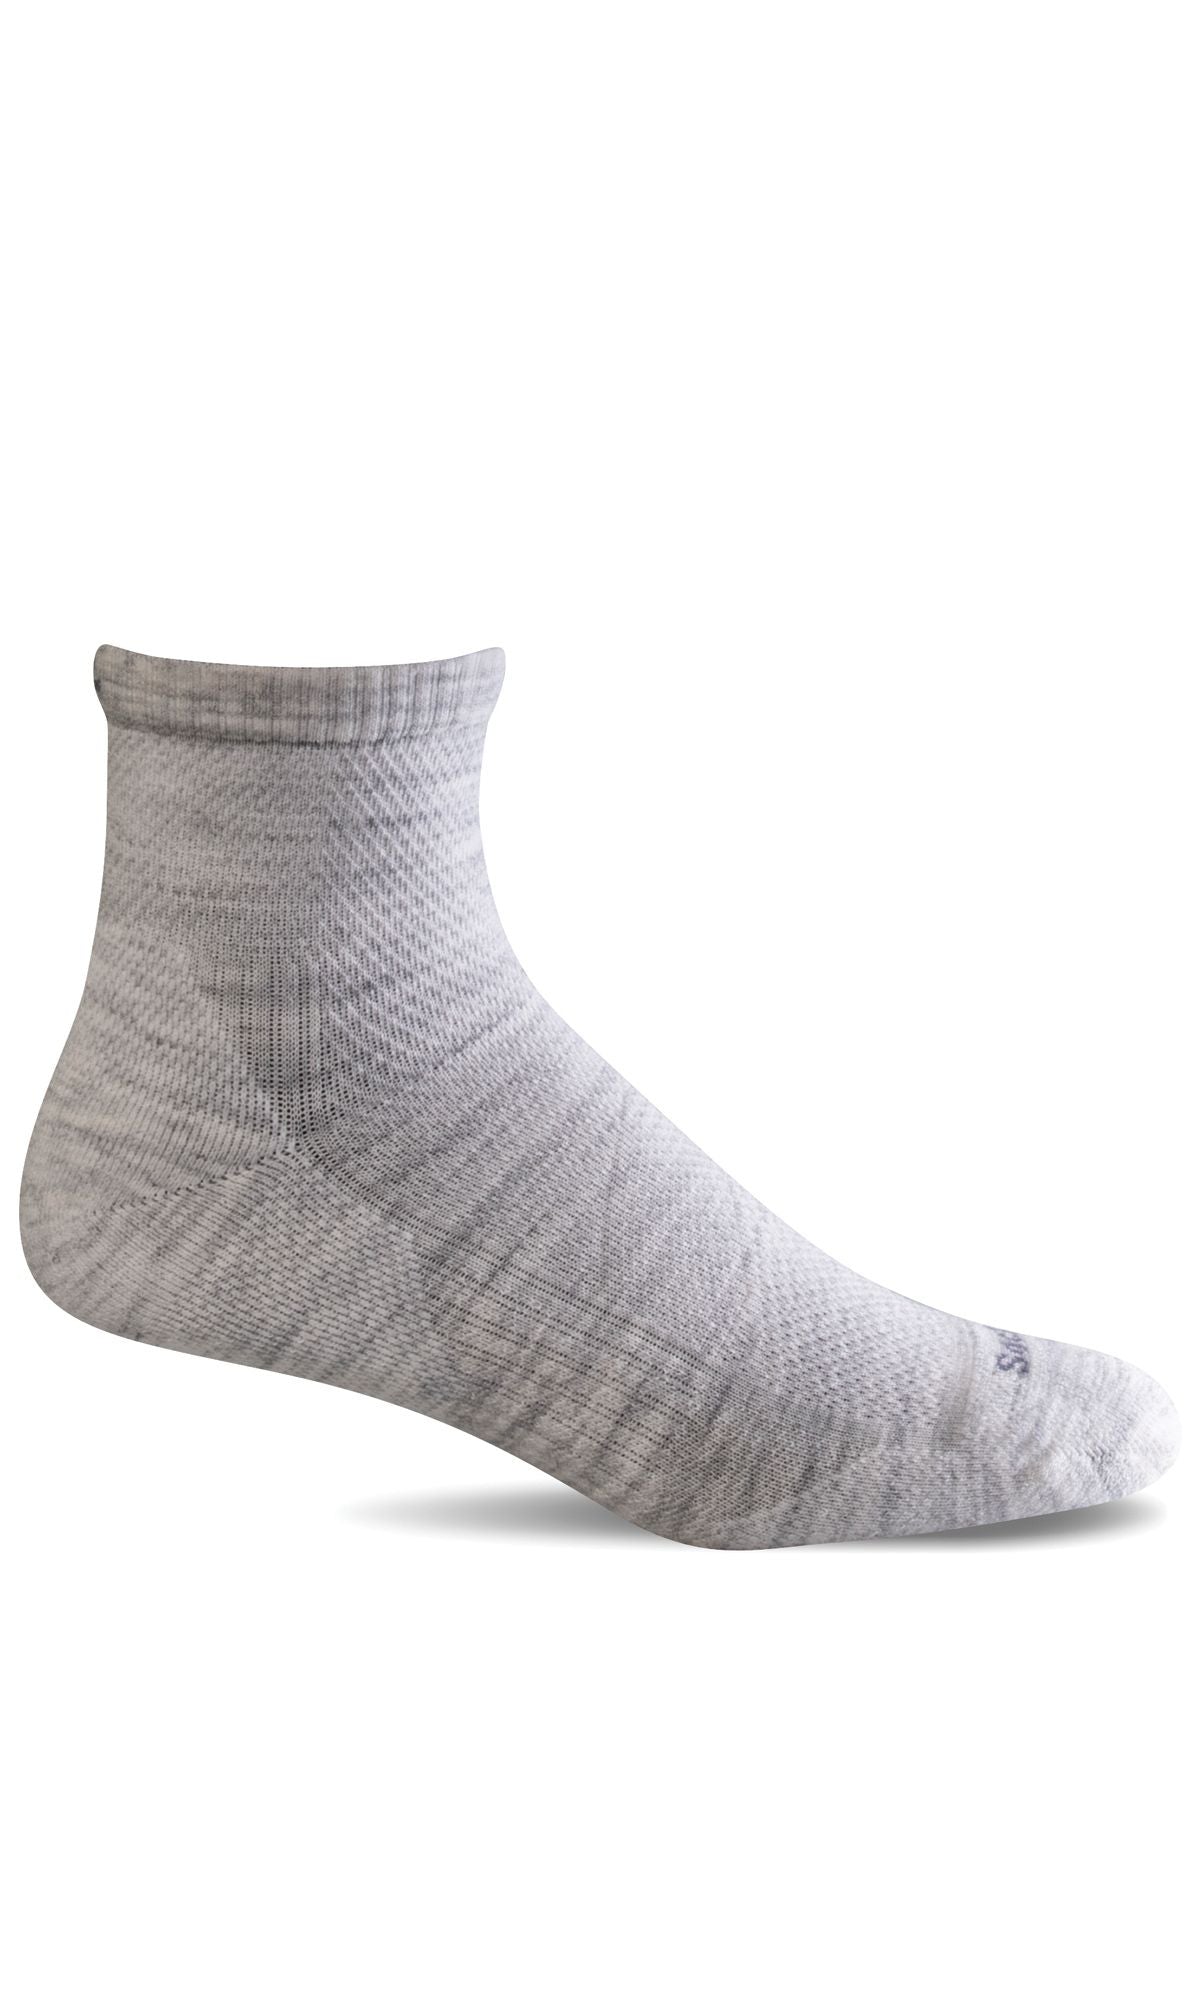 Sockwell Elevate Quarter Firm Compression Socks (Women's)